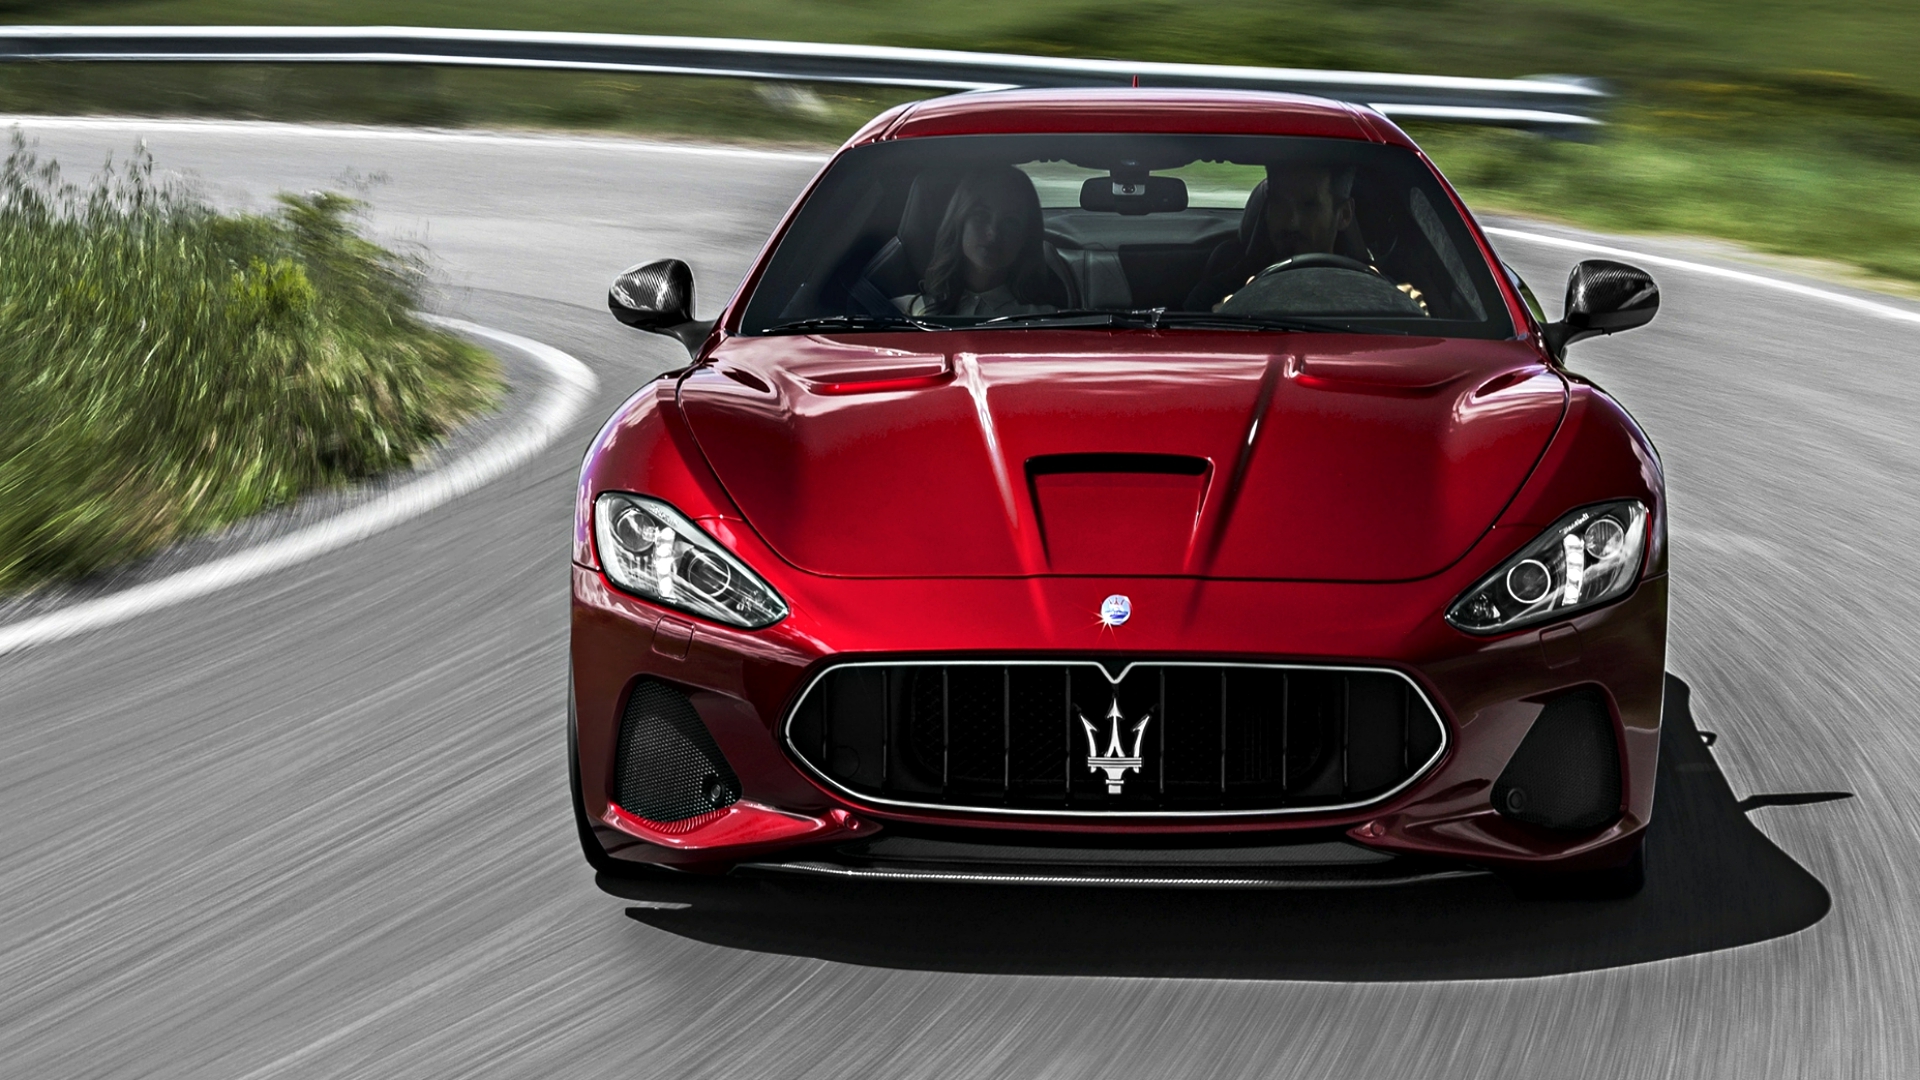 News - Maserati To Make Do Without Ferrari Power By 2021